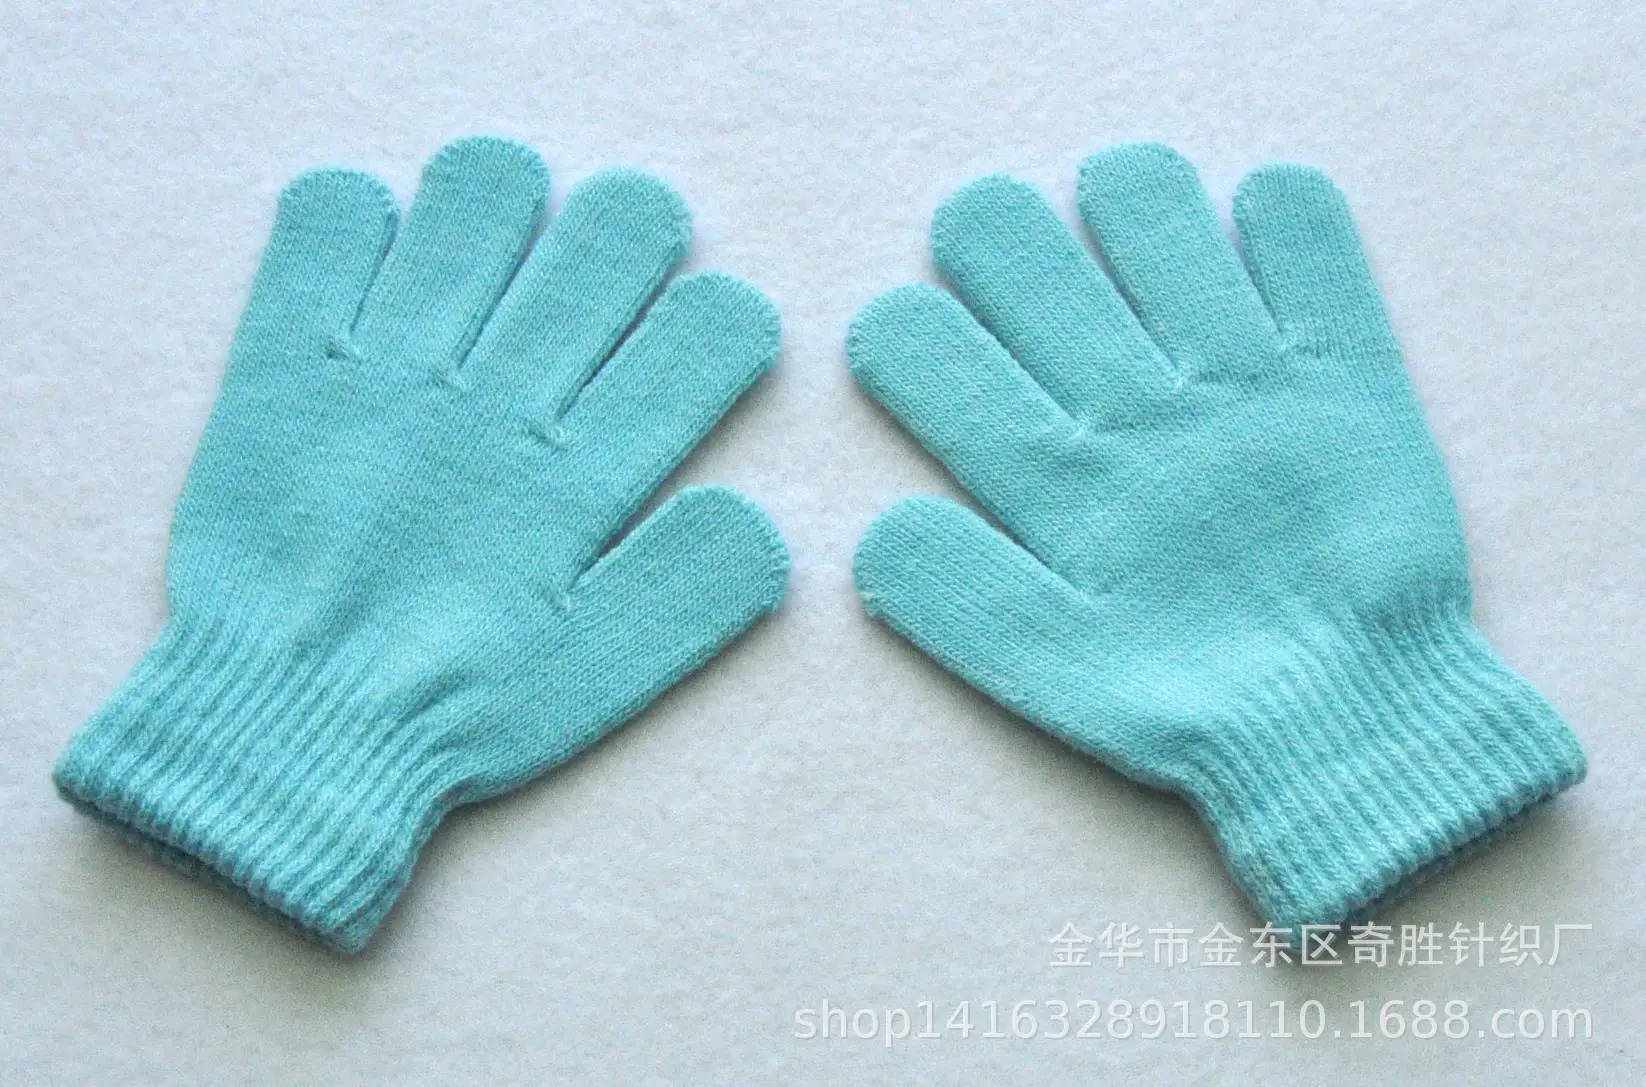 1 Pair Lytwtw's Anti-grasping Warm Winter Gloves Kids Protection Baby Mitten Cute Unisex Girls Boy Newborn Love Face Mittens baby accessories store near me	 Baby Accessories